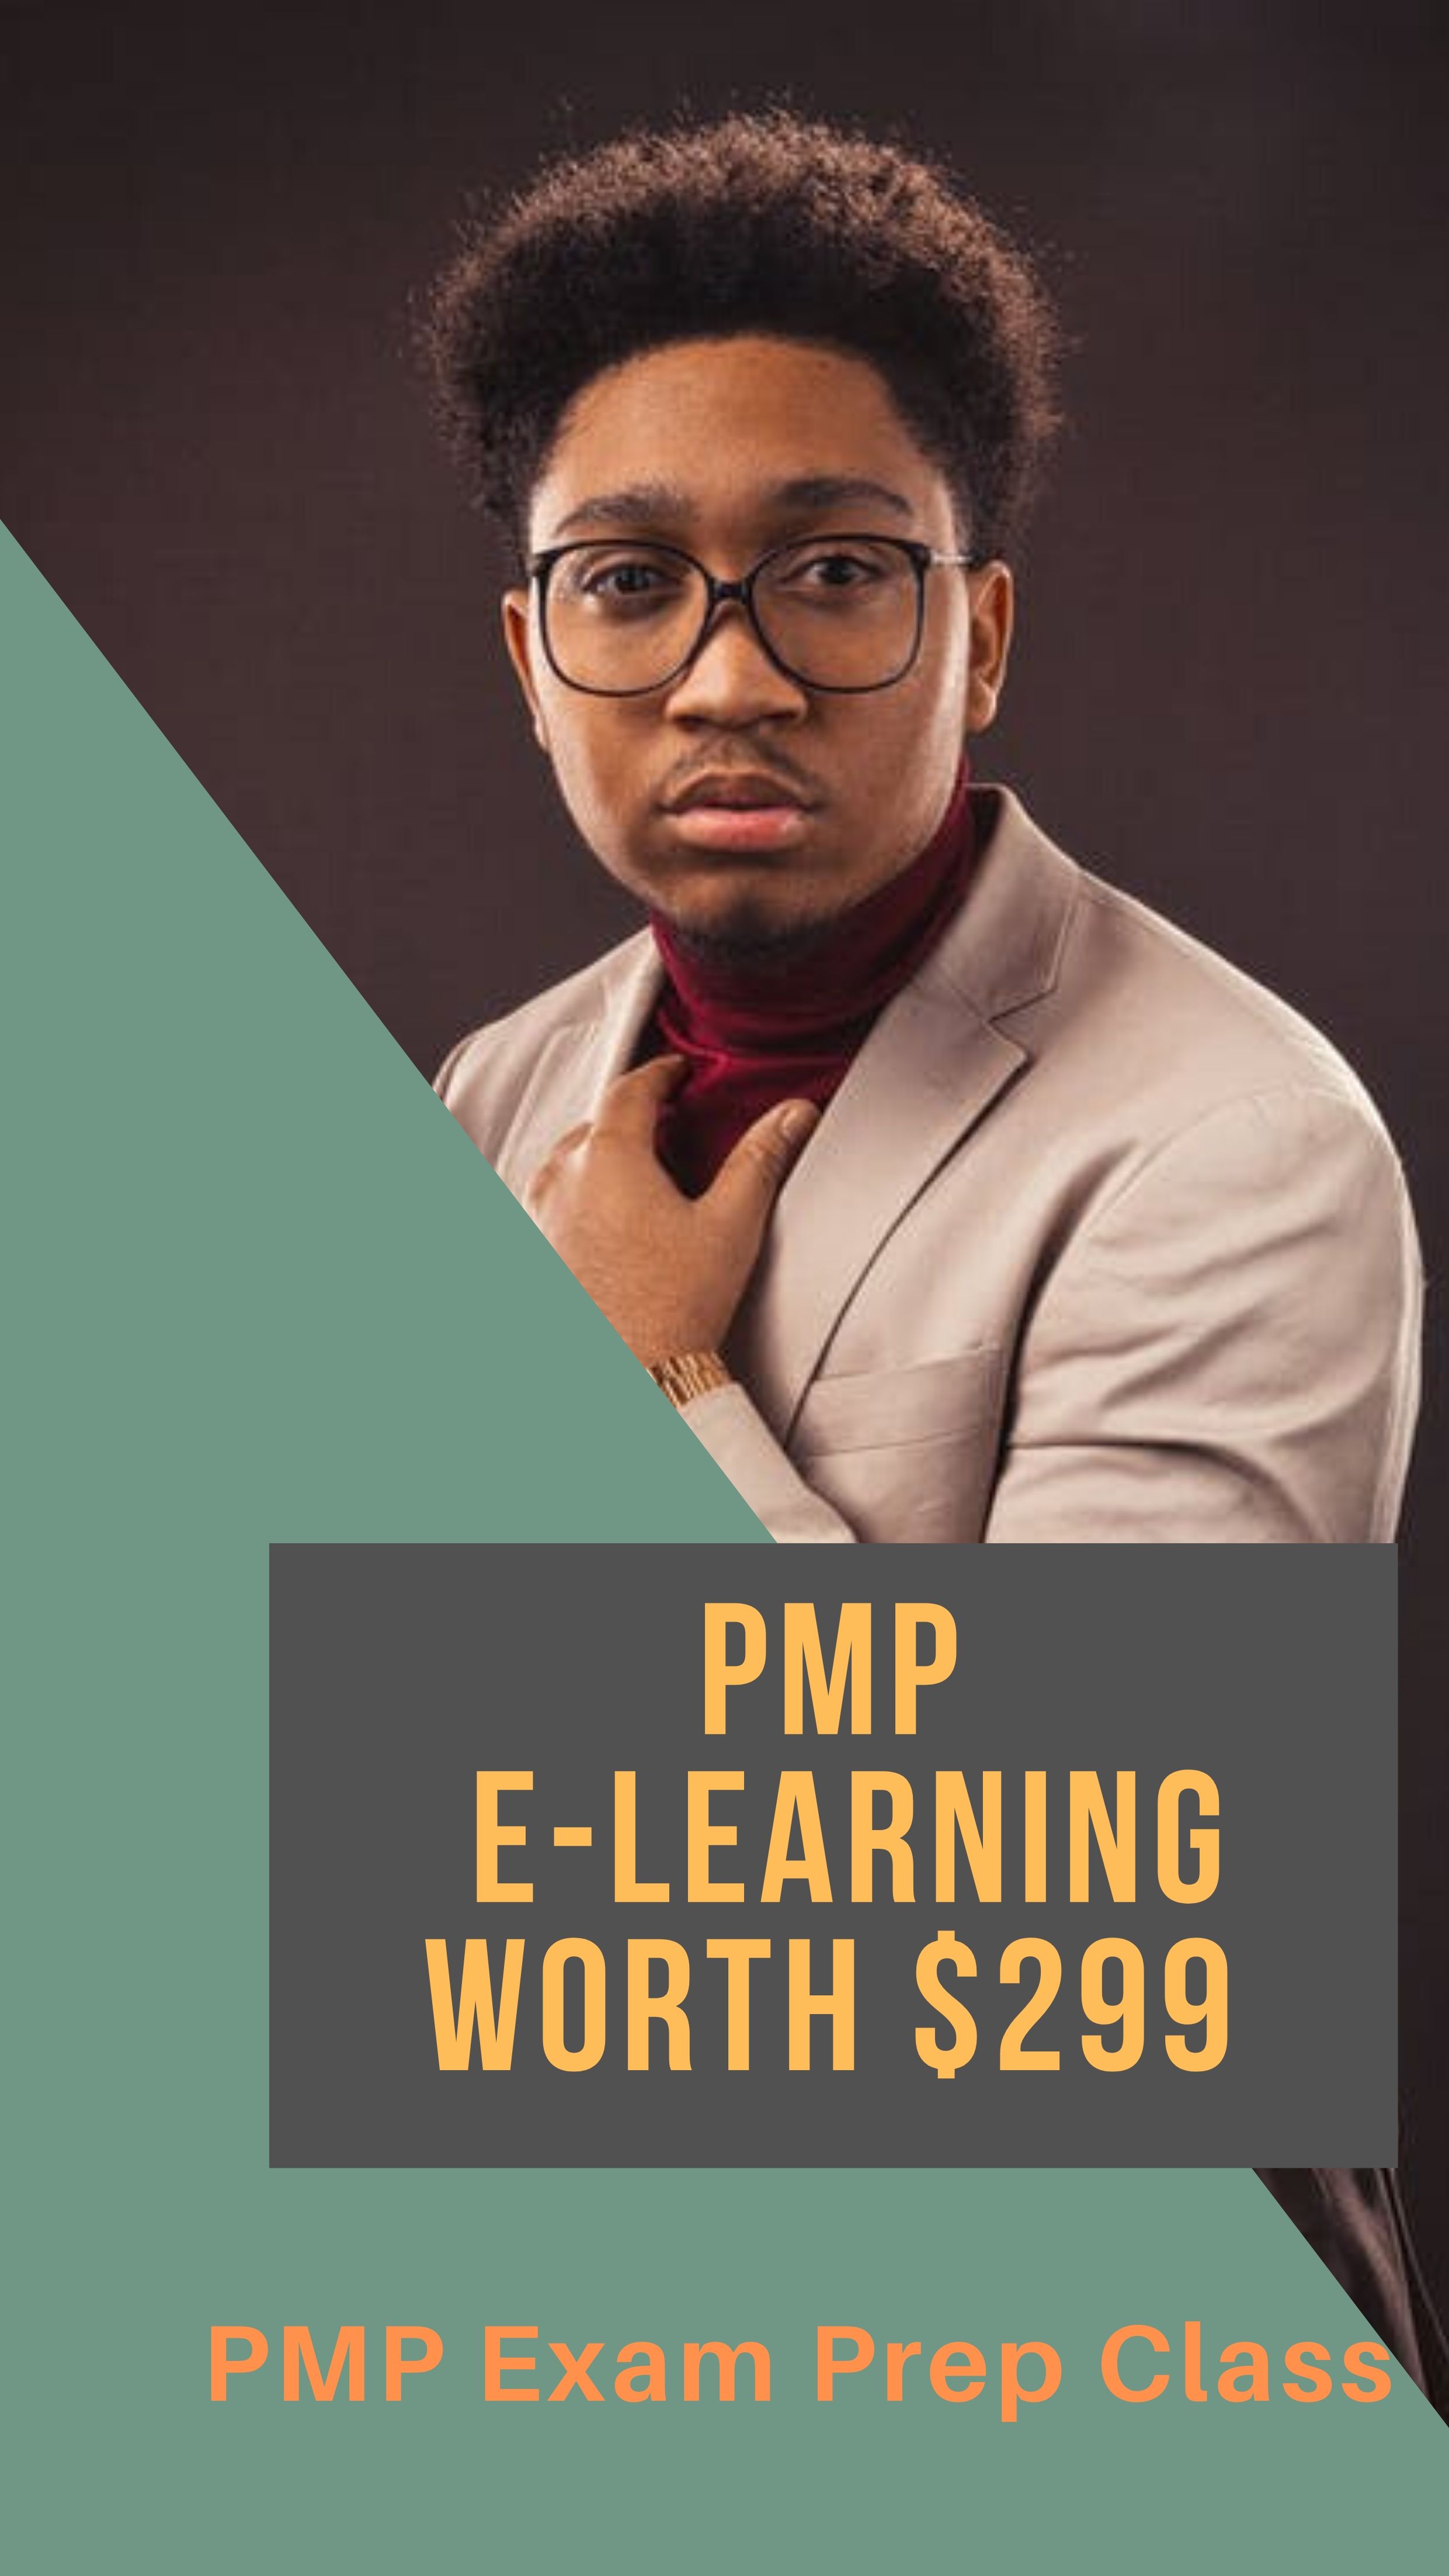 PMP Certification Training Program